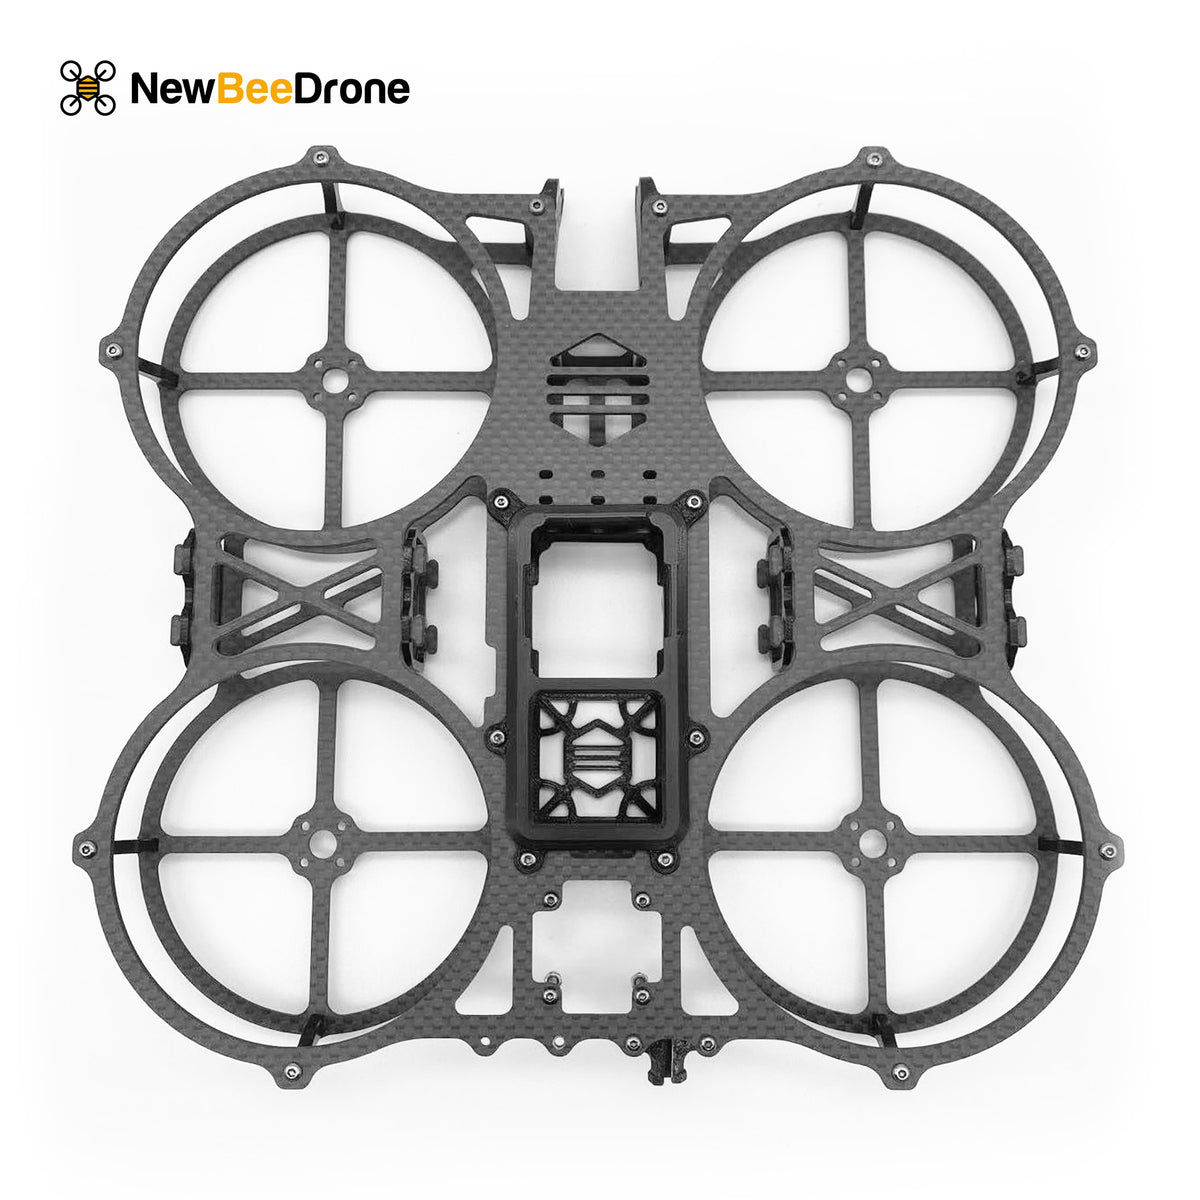 NewBeeDrone Invisi360 Cinewhoop Frame Kit – wholesale.newbeedrone.com